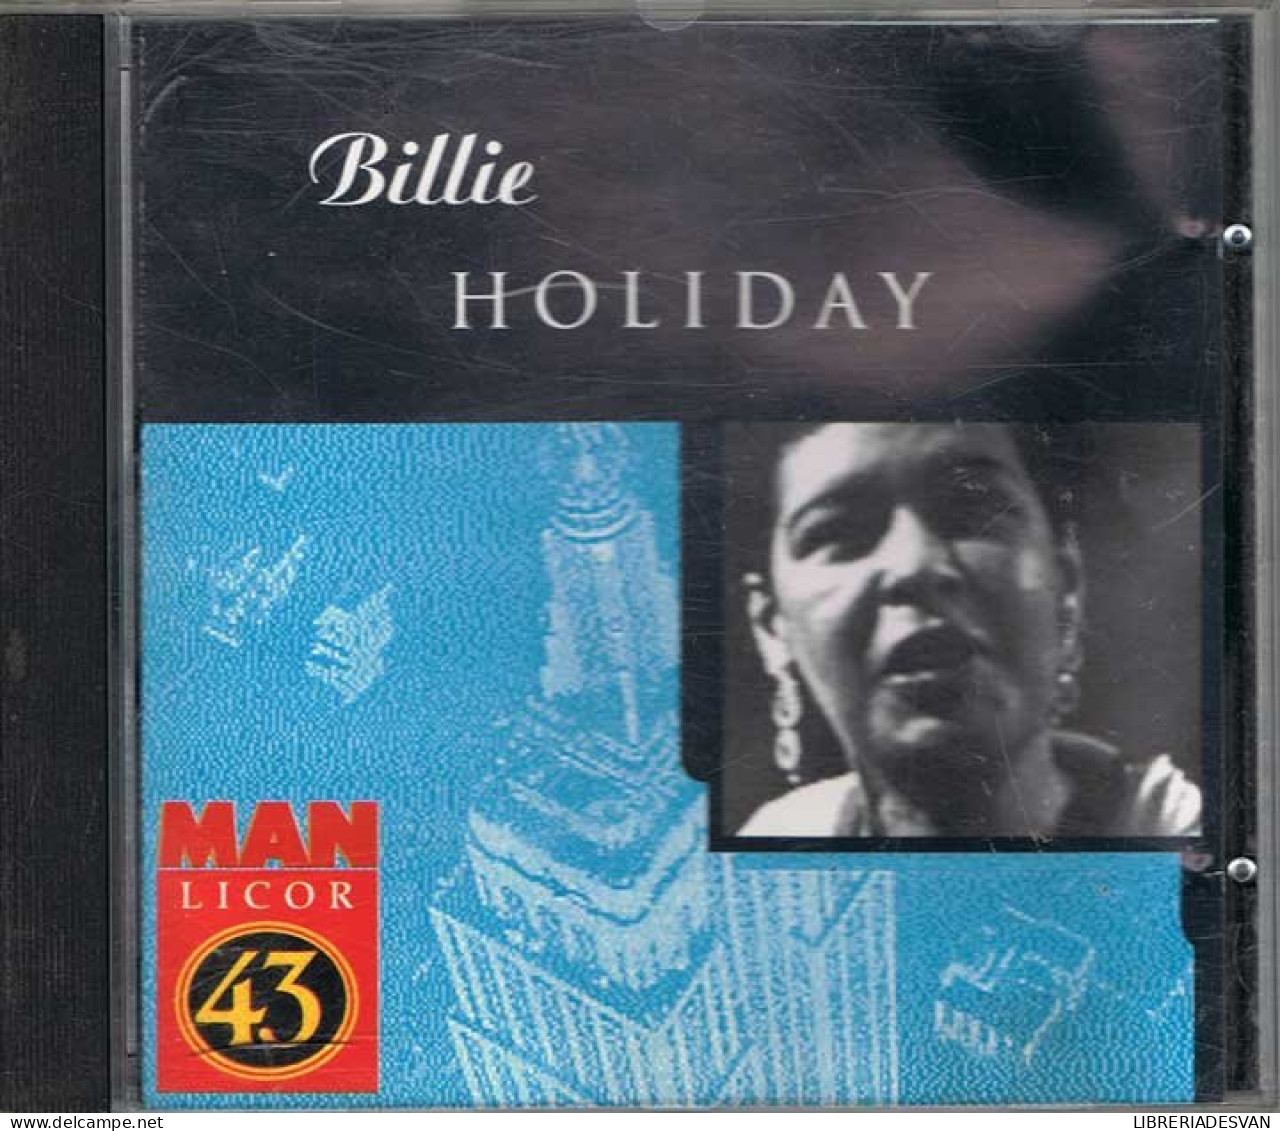 CD Billie Holiday. Man Licor 43 - Jazz